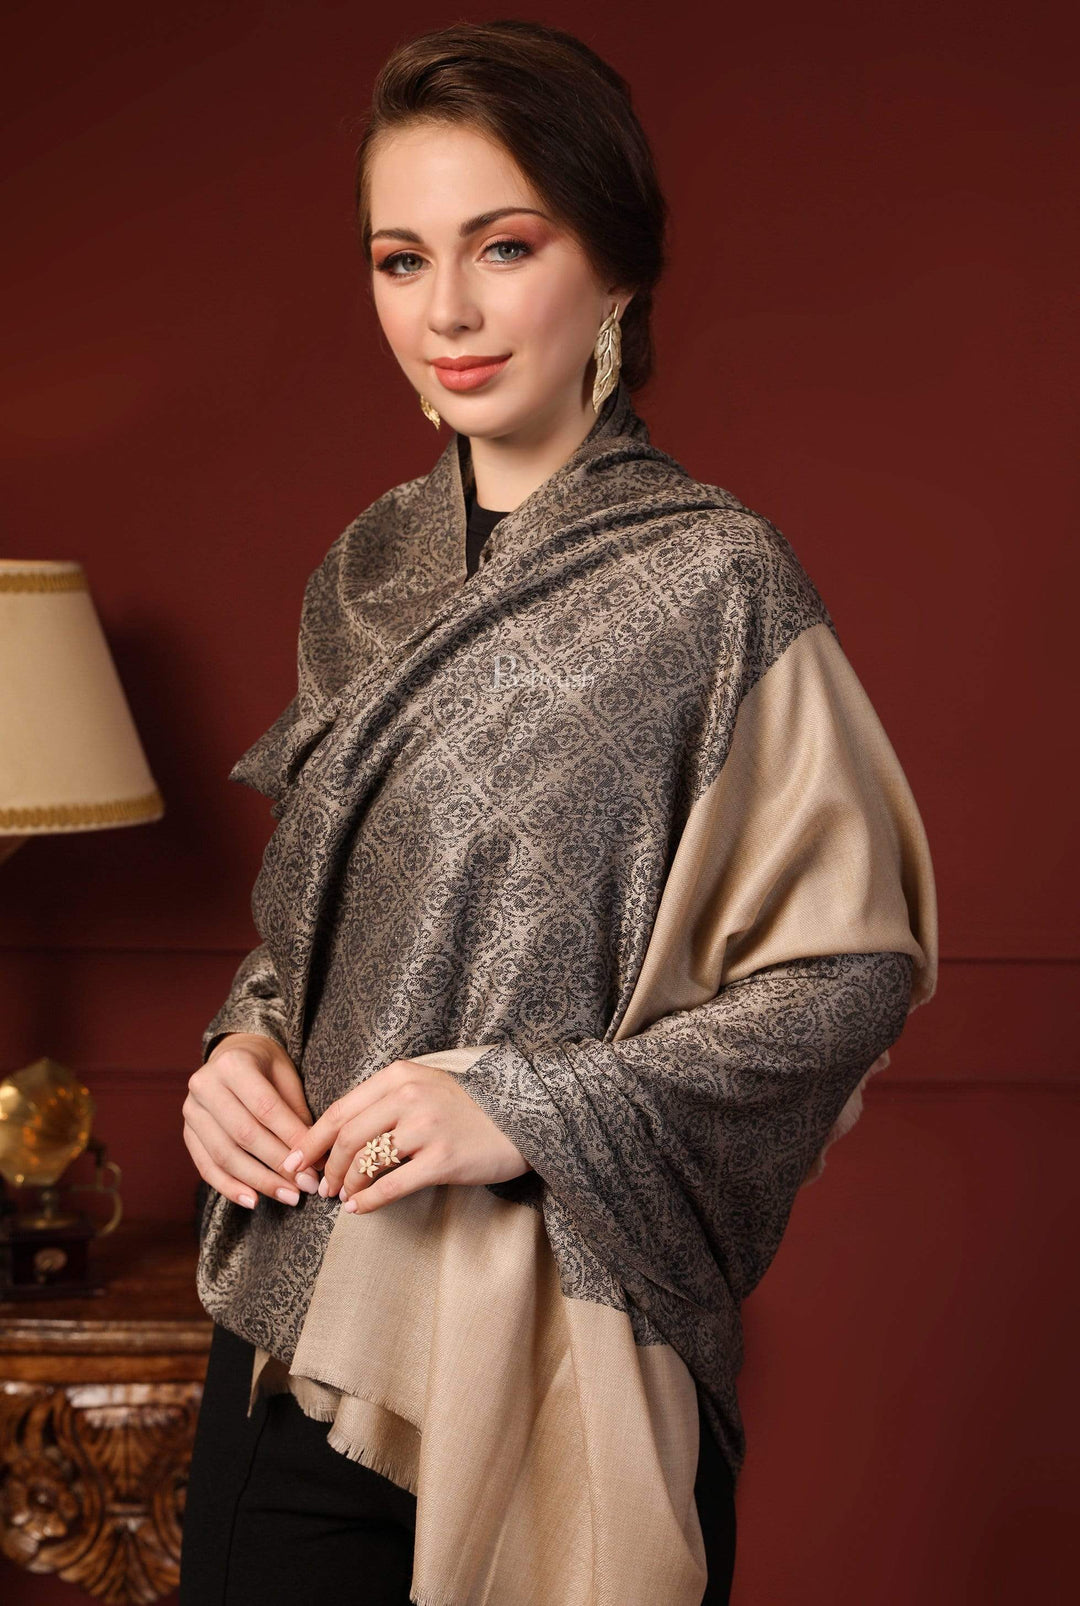 Pashtush India 100x200 Pashtush Womens Woven Paisley, Self Shawl, In Extra Soft Fine Wool, Large Wrap Size